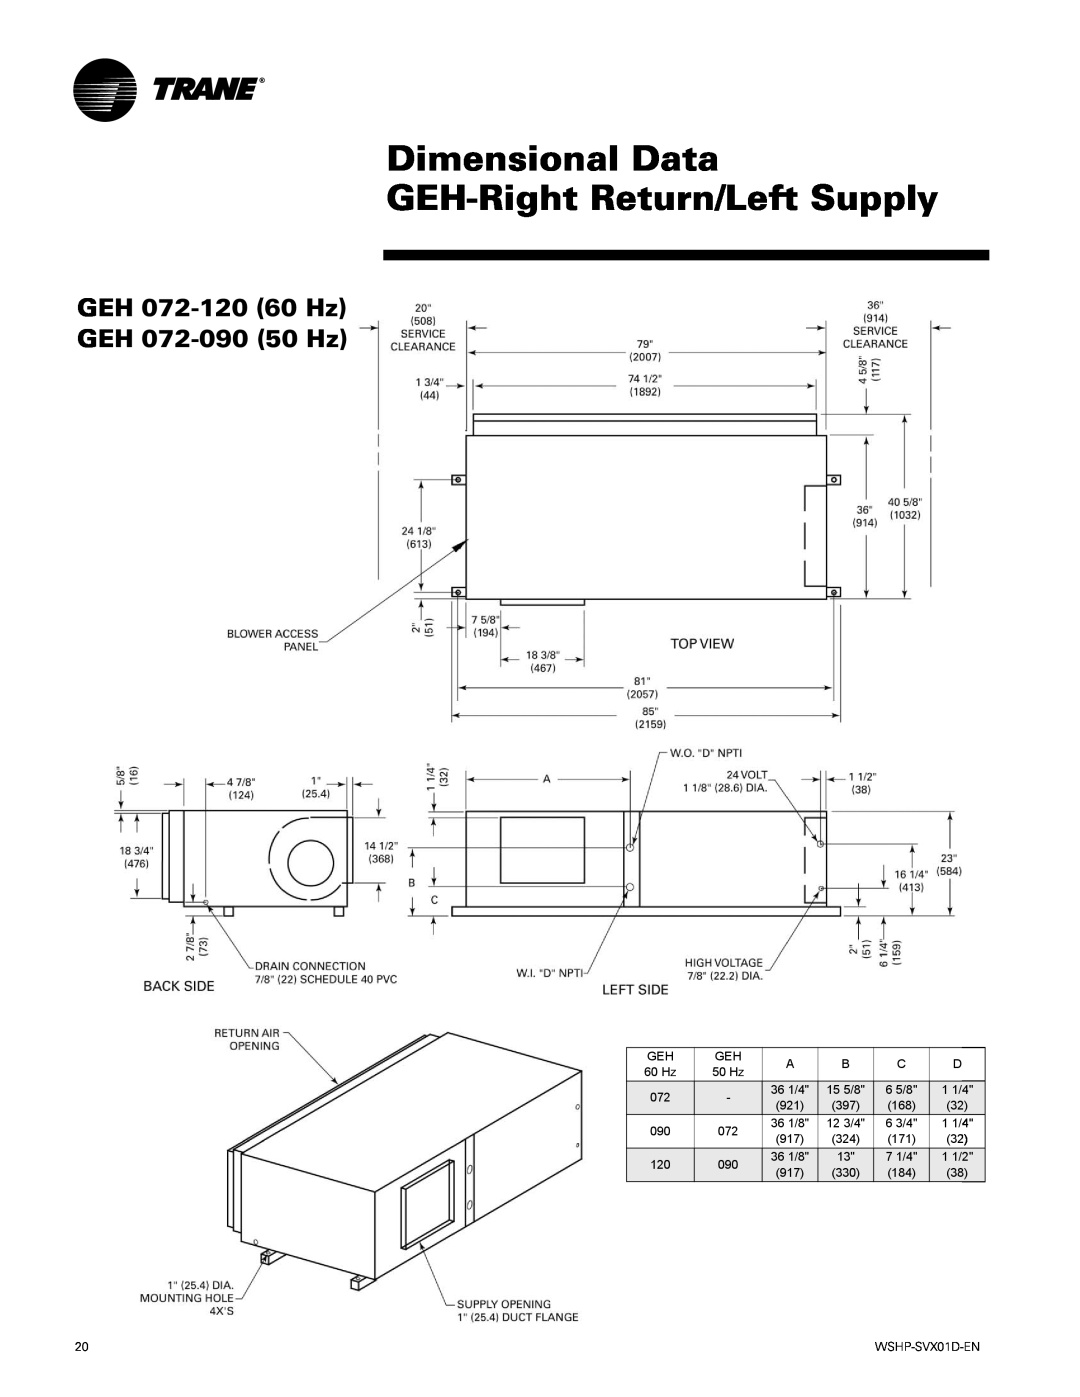 Trane GEV manual Dimensional Data GEH-RightReturn/Left Supply, GEH 072-12060 Hz GEH 072-09050 Hz 